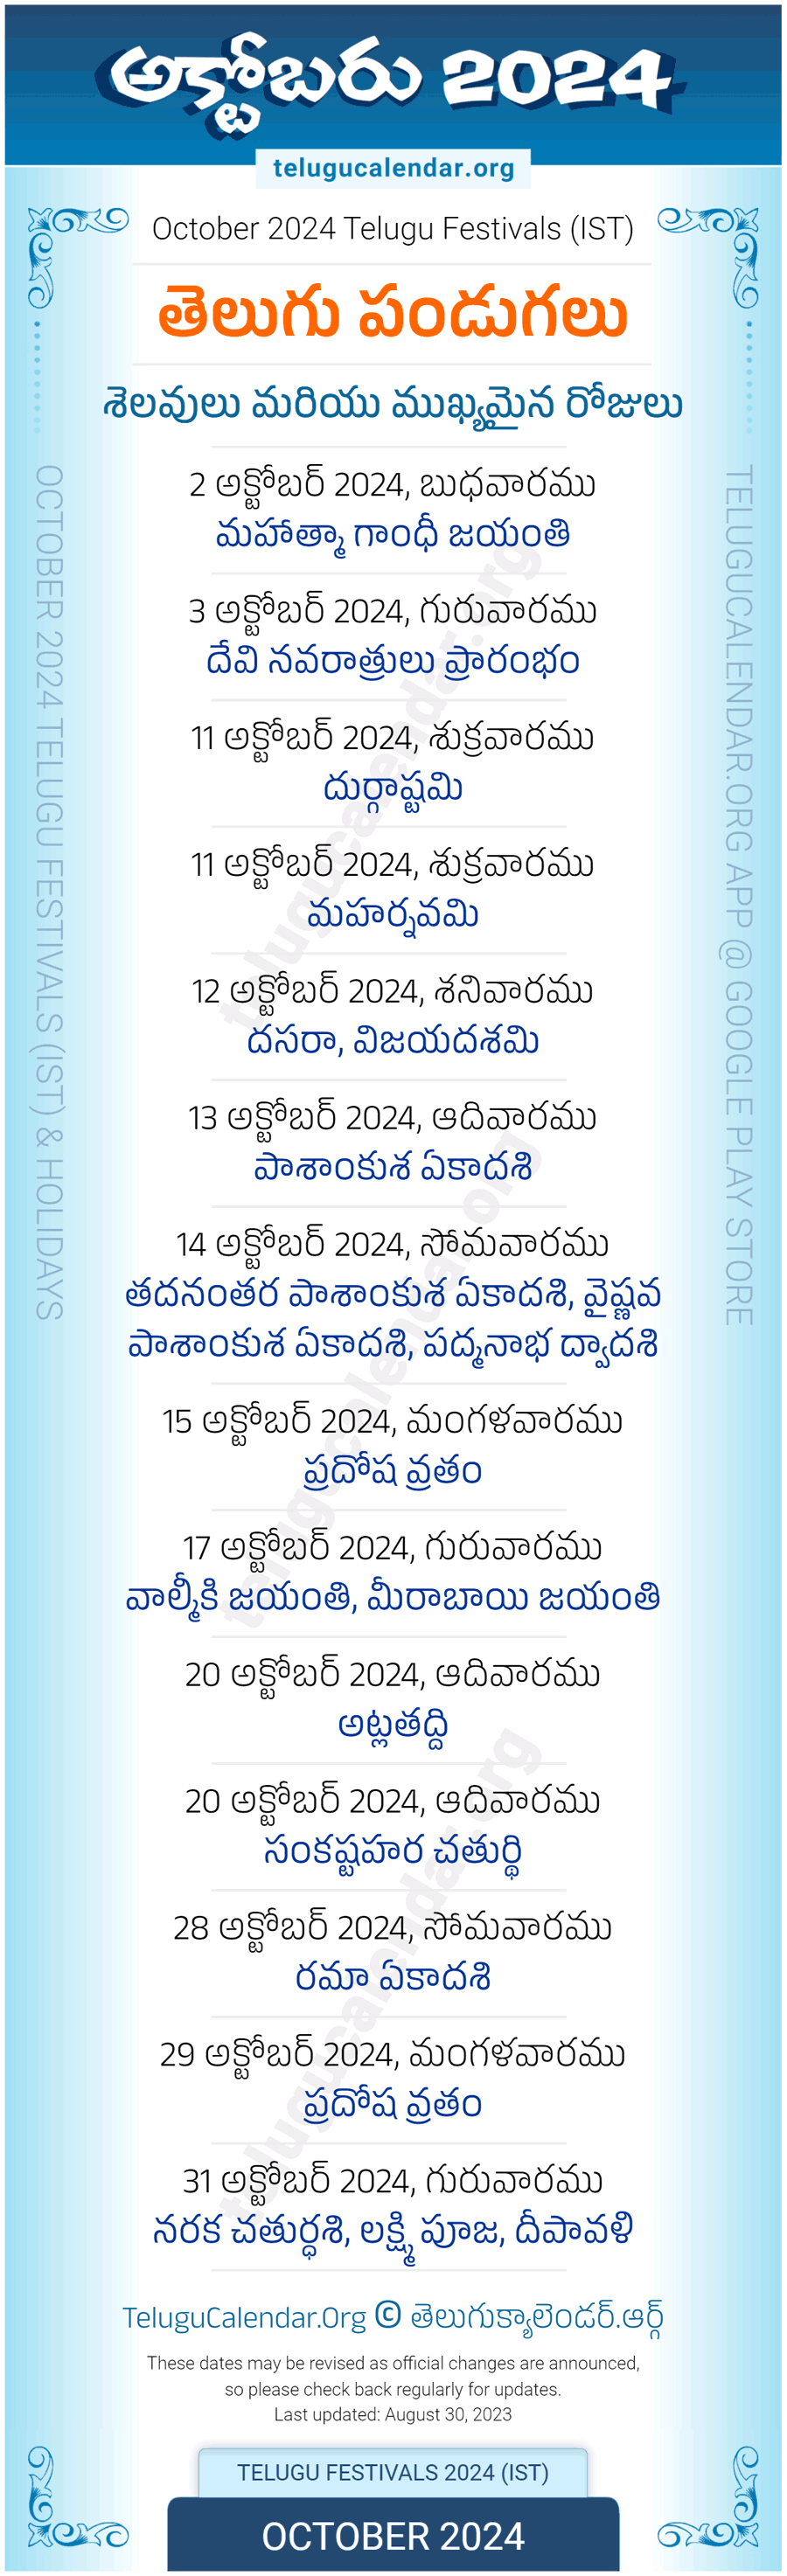 Telugu Festivals 2024 October